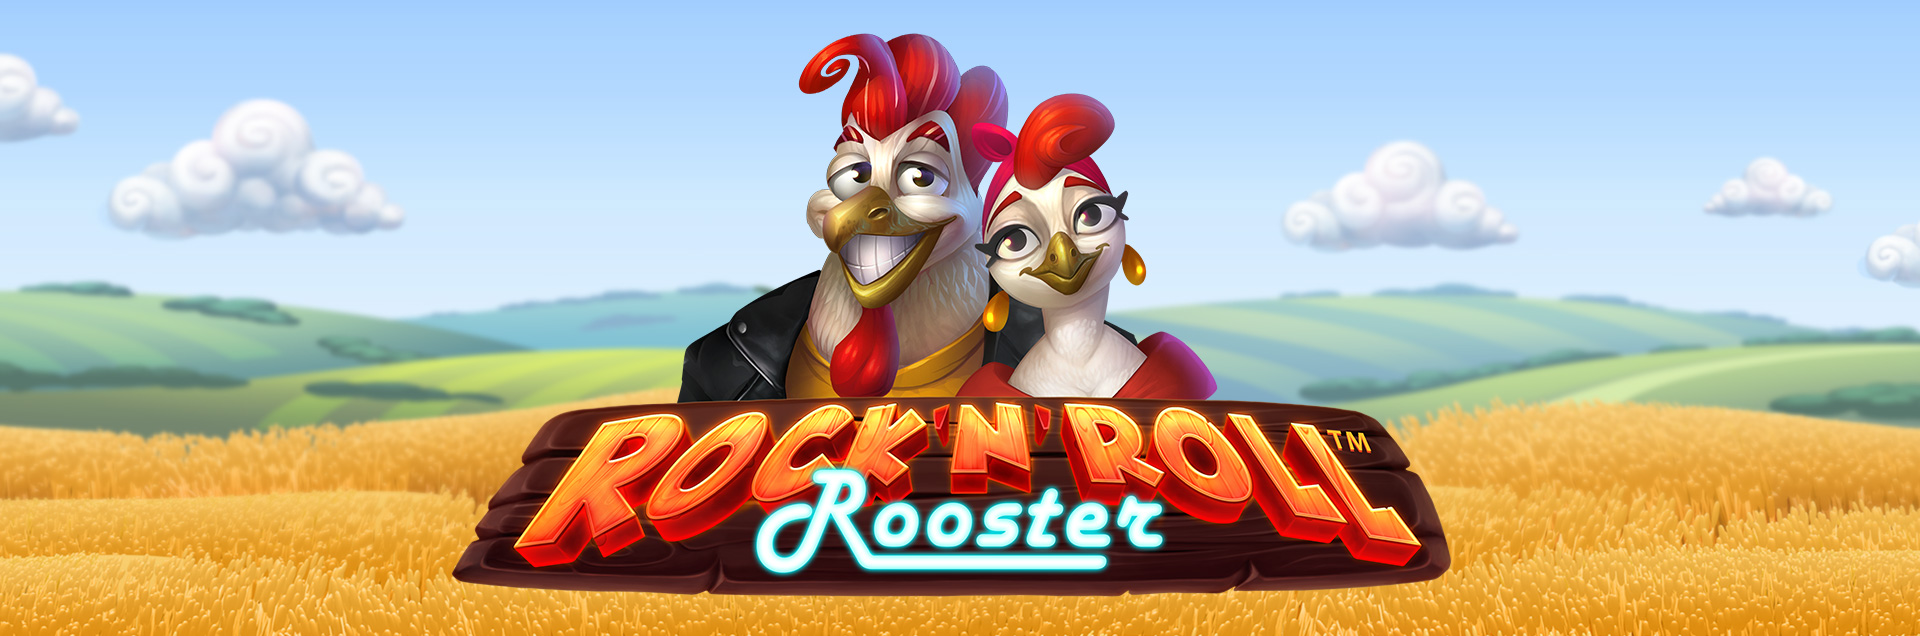 Rock n Roll Rooster games header